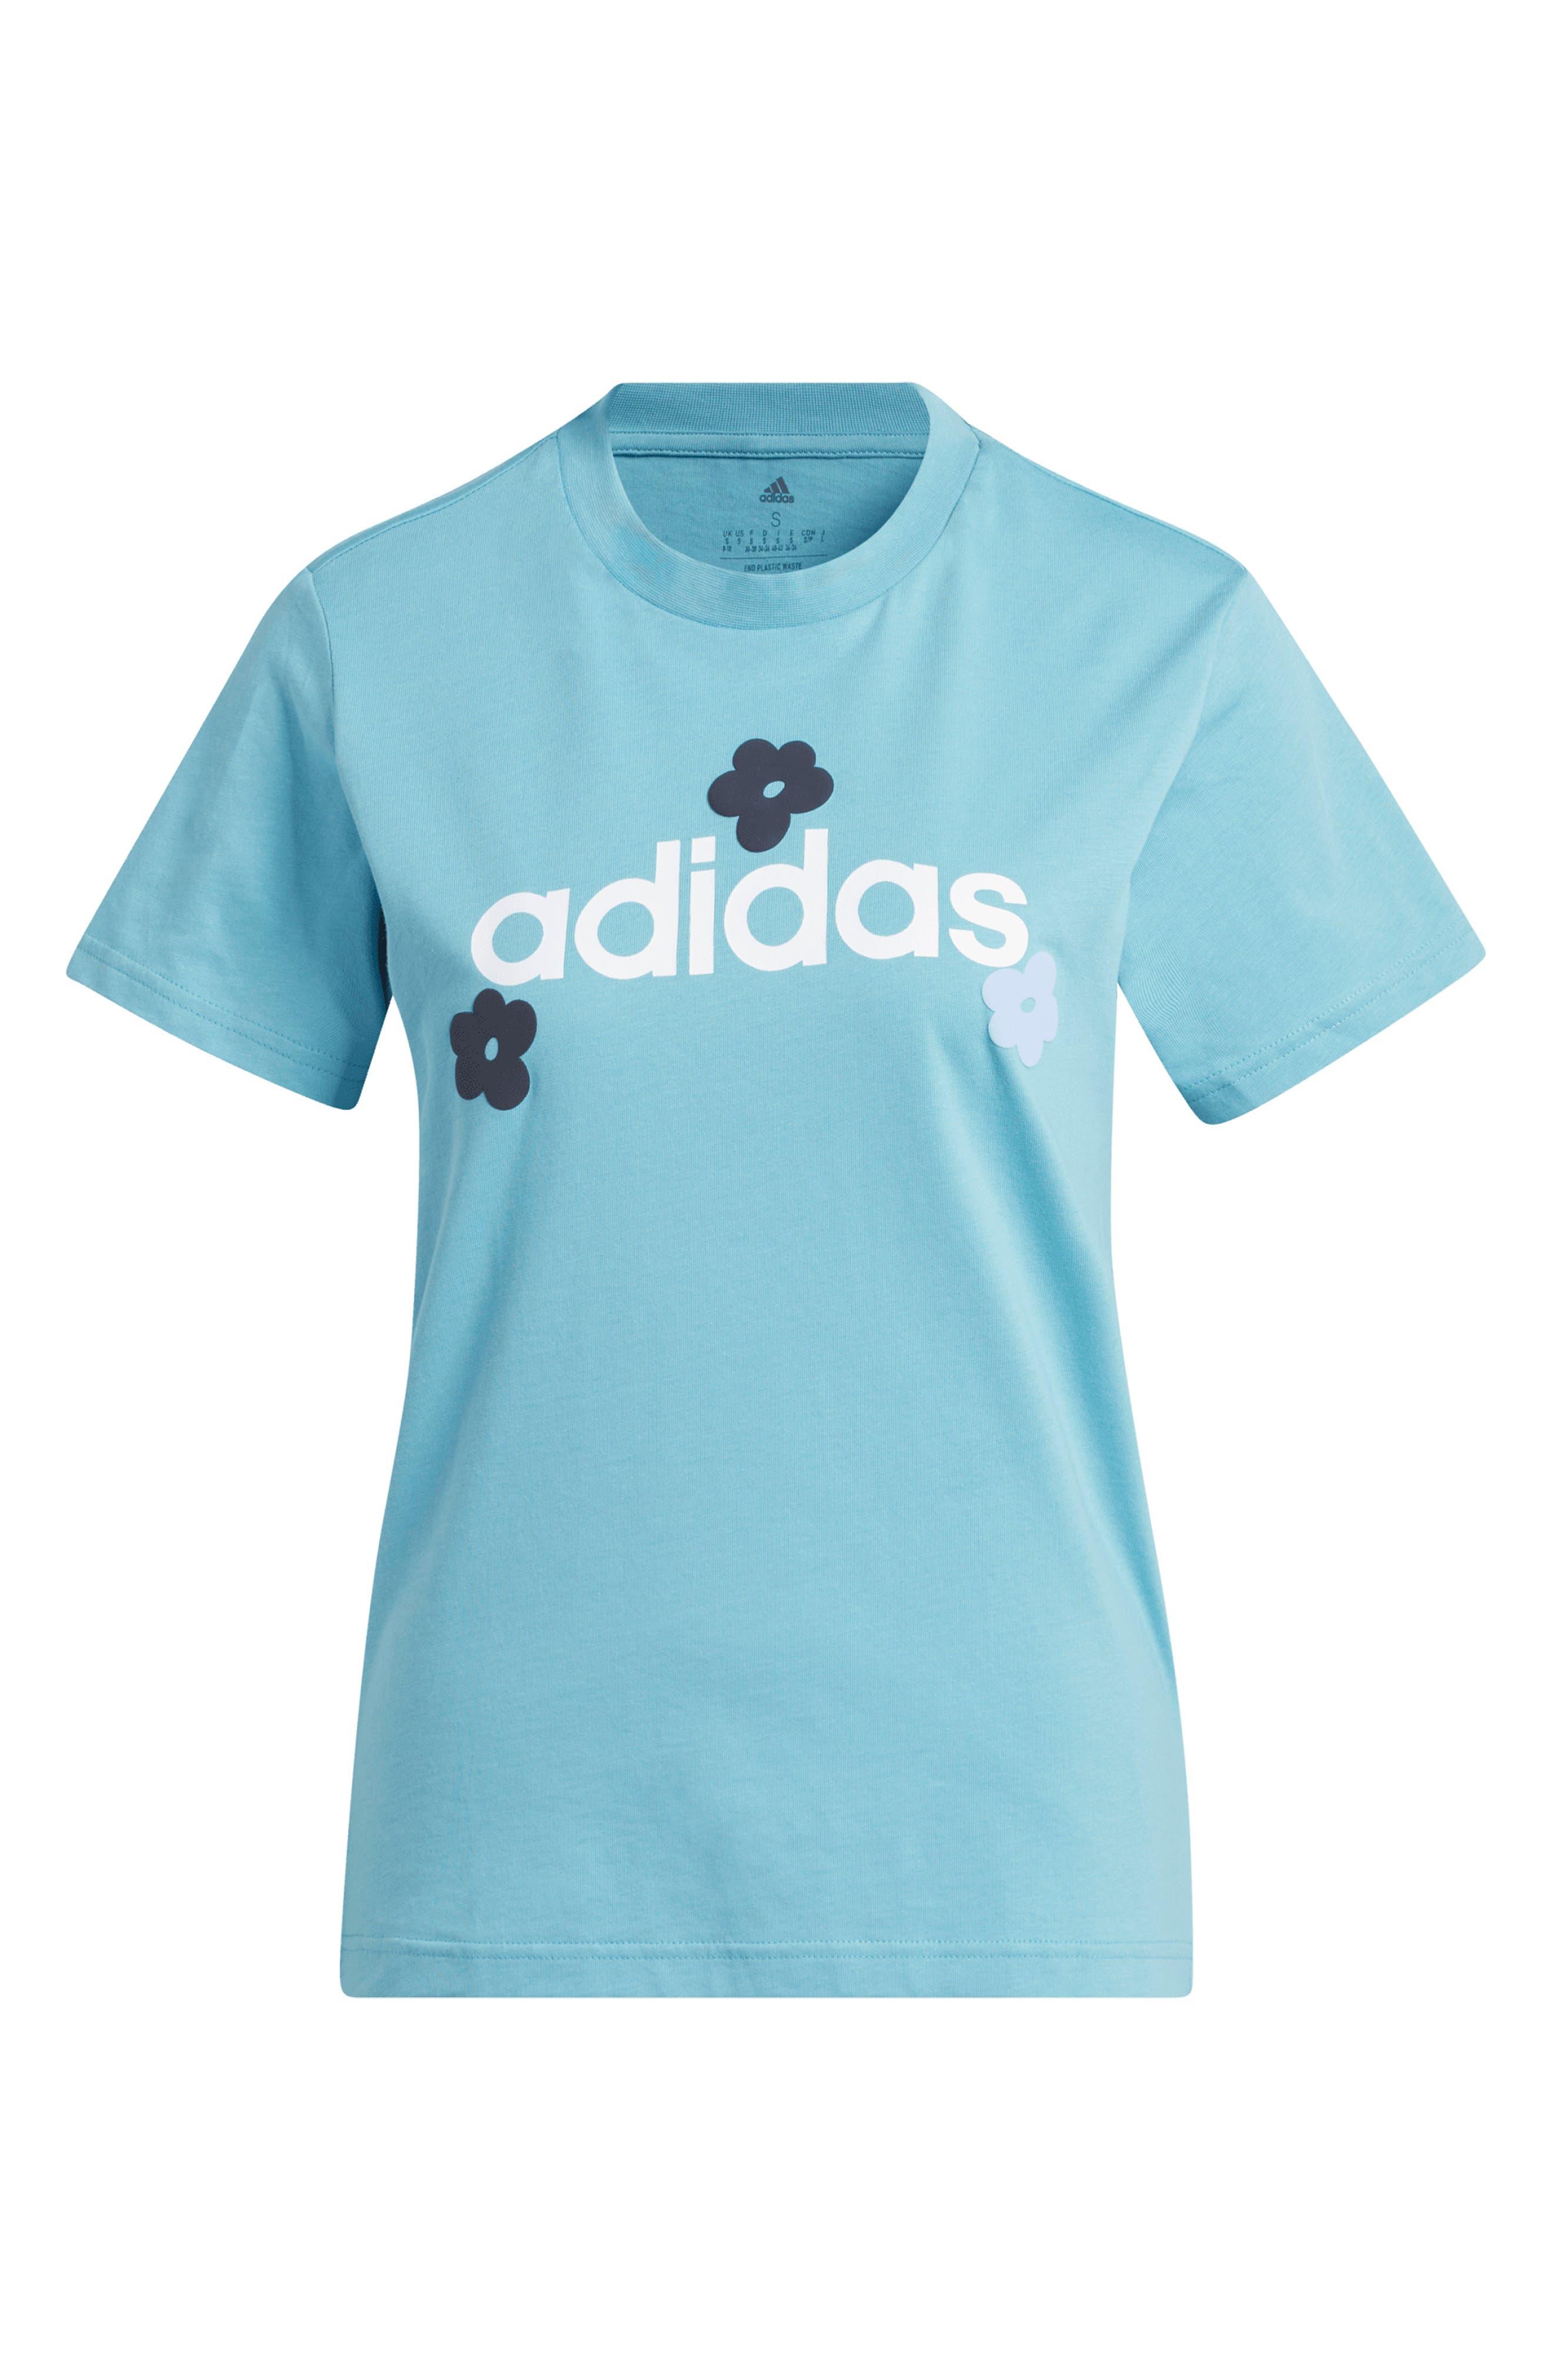 adidas Flower Logo Graphic T-shirt in Blue | Lyst